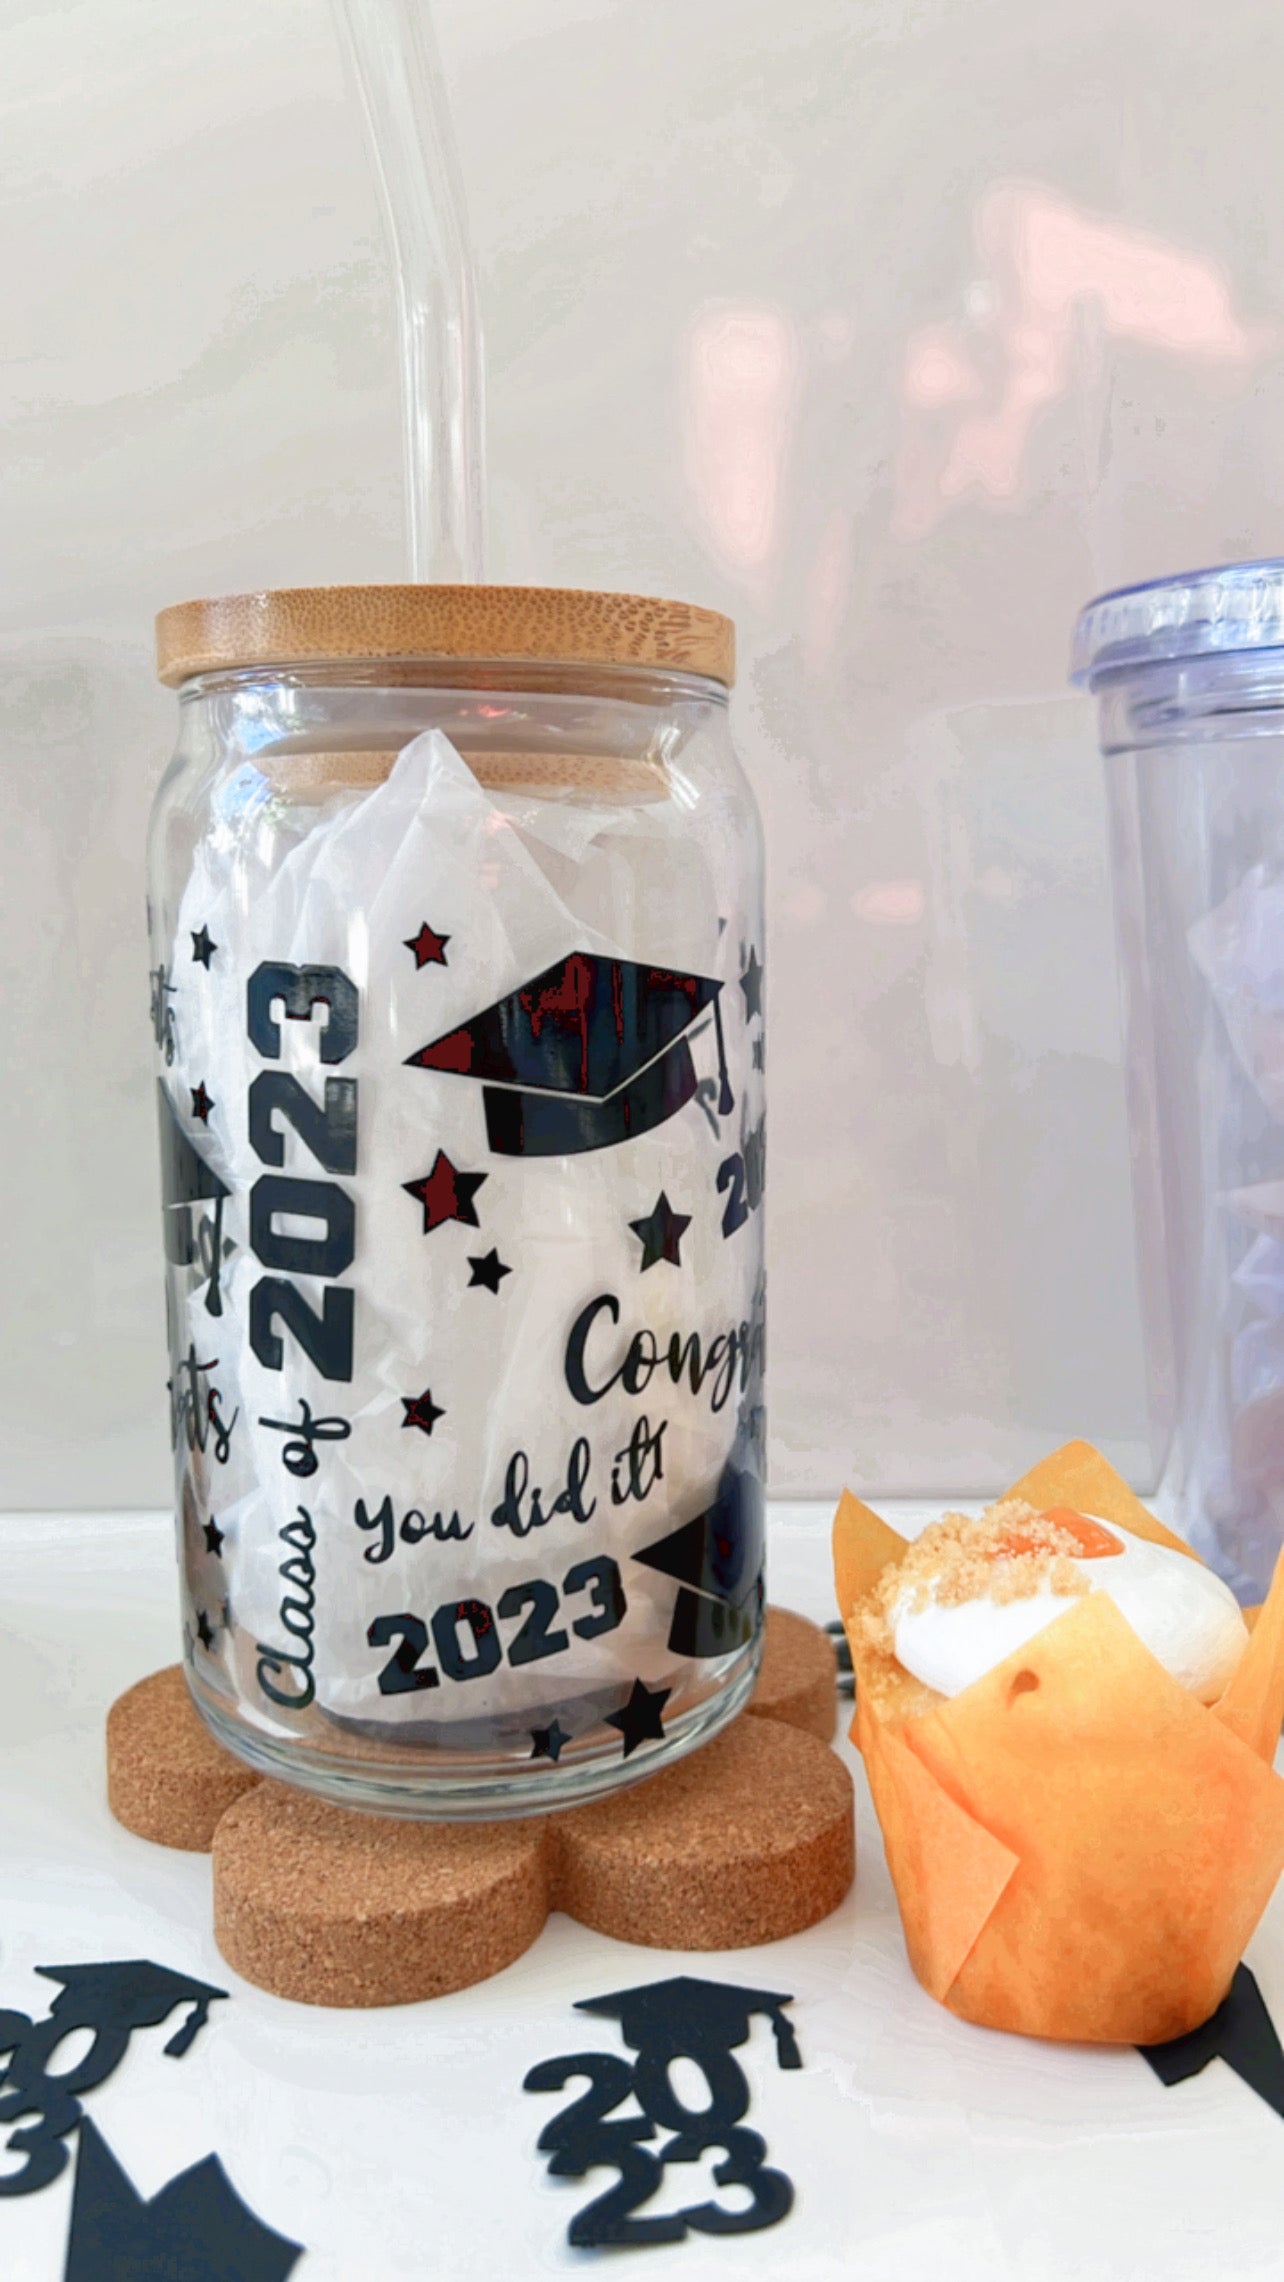 Class of 2023 Gift Jar | M&M'S